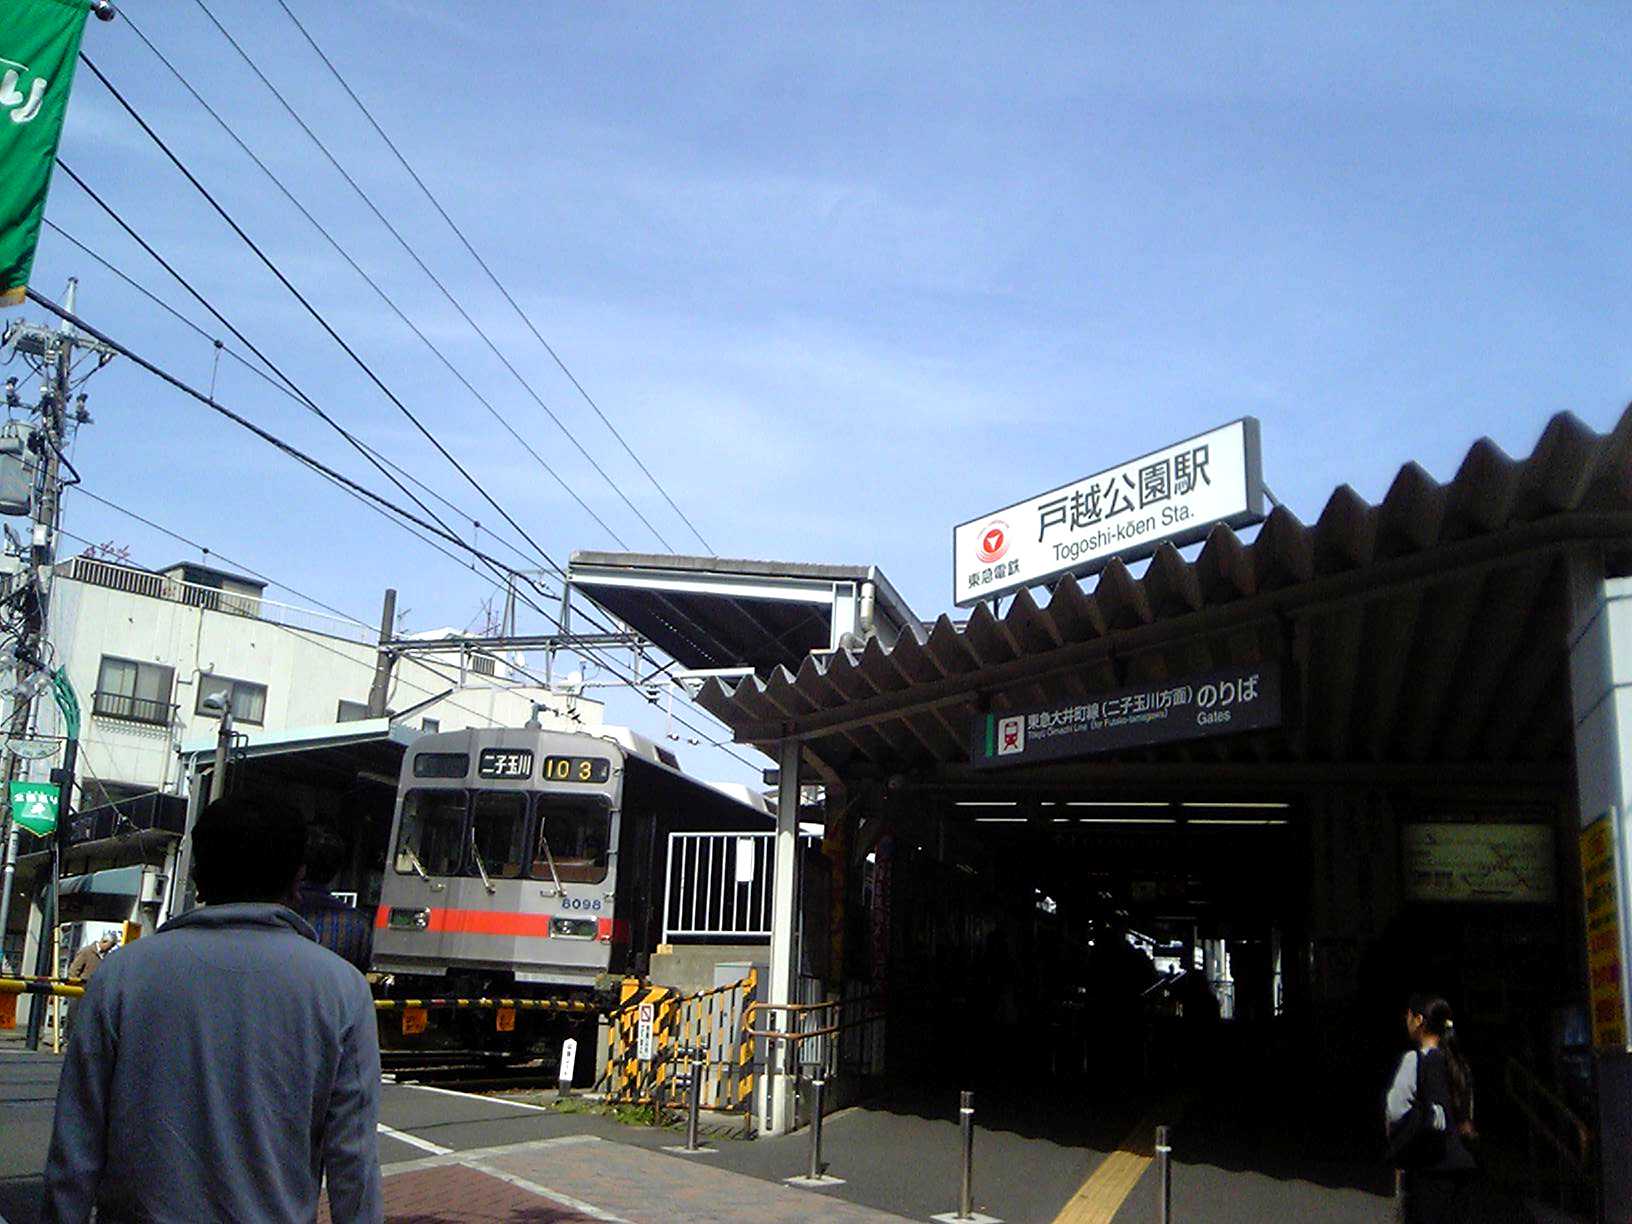 Togoshi-kōen Station